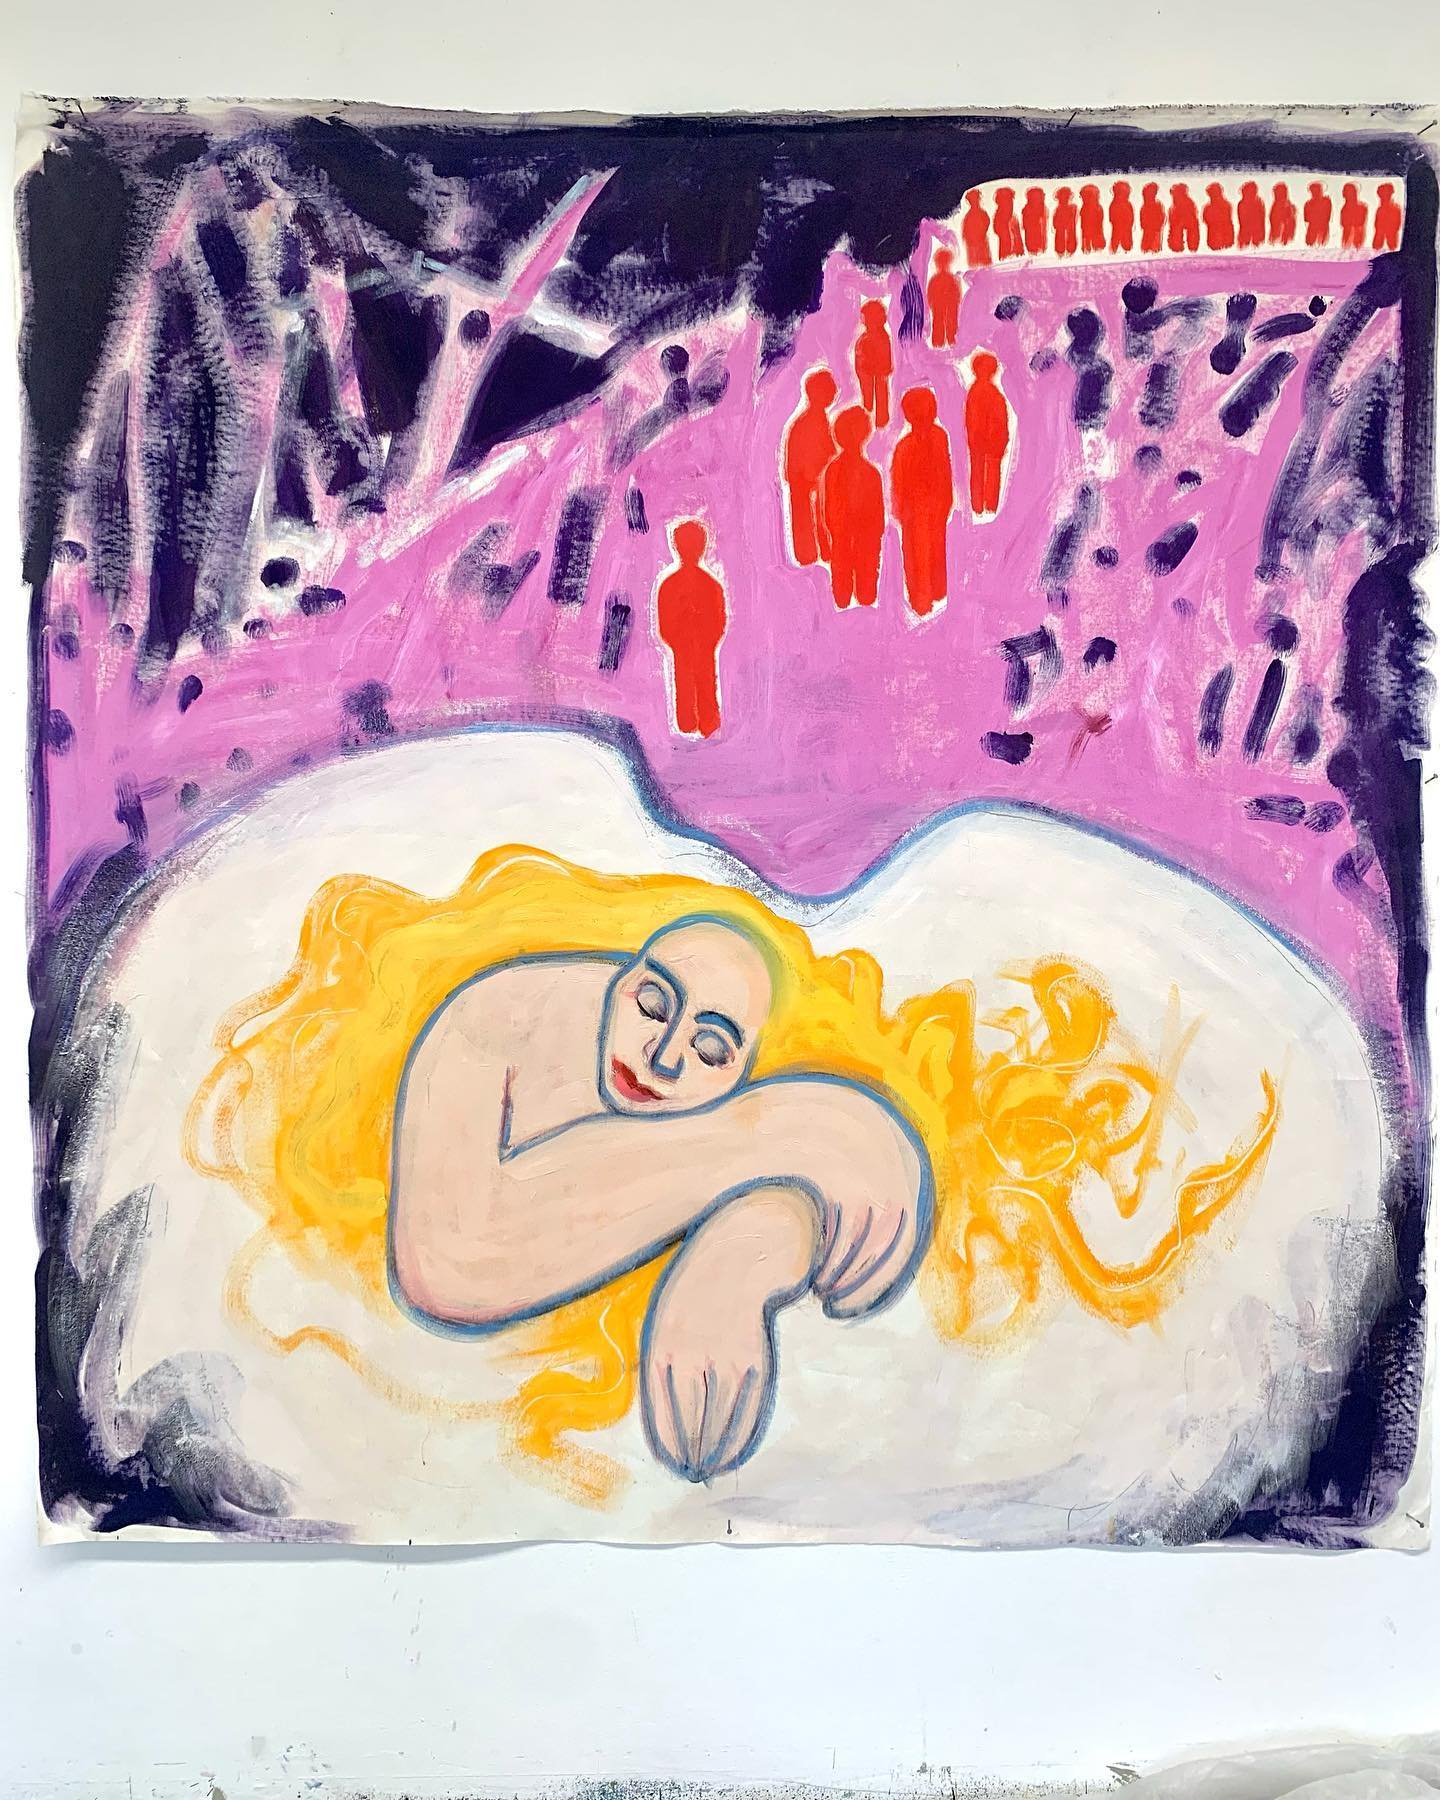 &hellip;sleeping angel&hellip;
#sleeping #angel #dawn #oil #painting #artistinstudio #berlin#berlinart